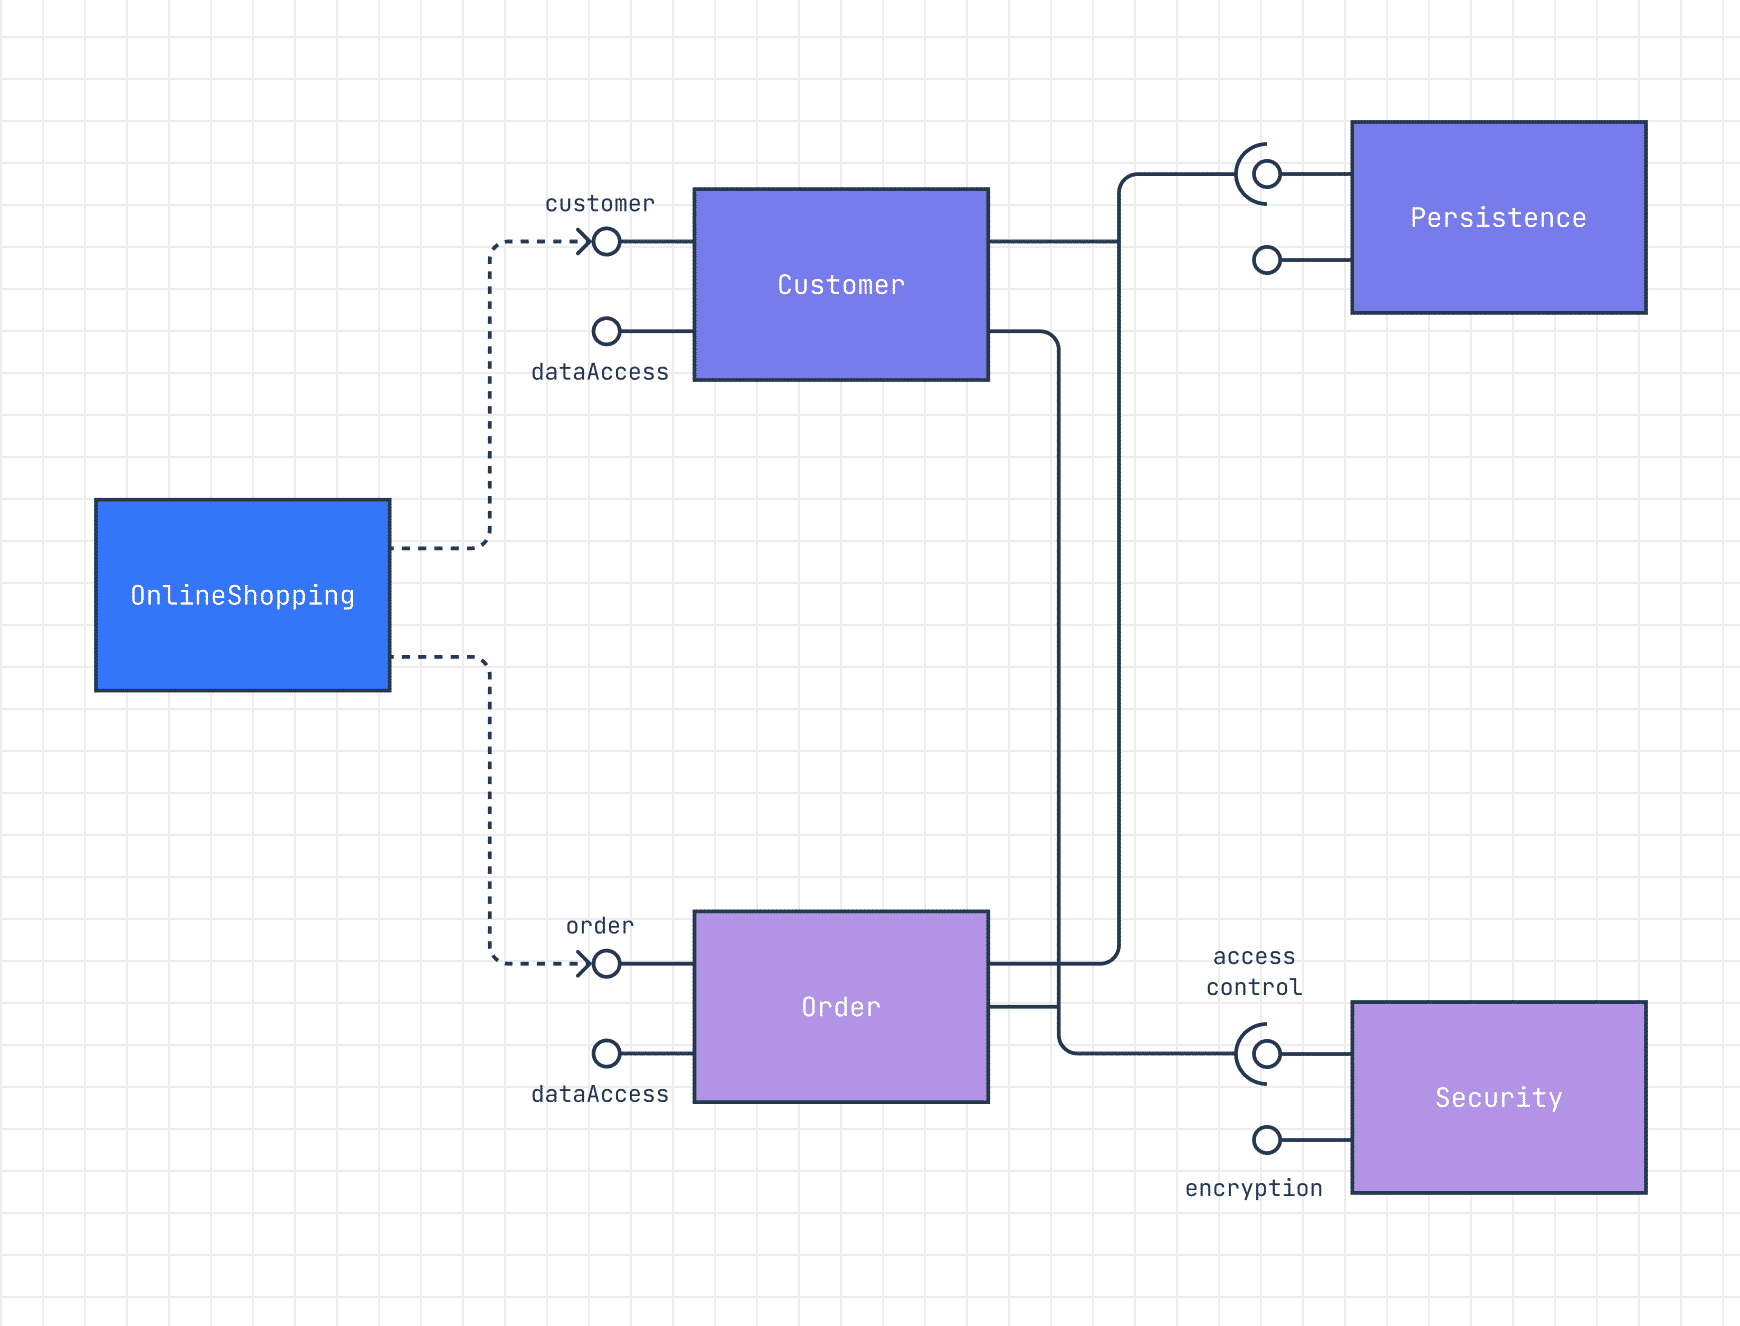 Component UML diagram for online shopping